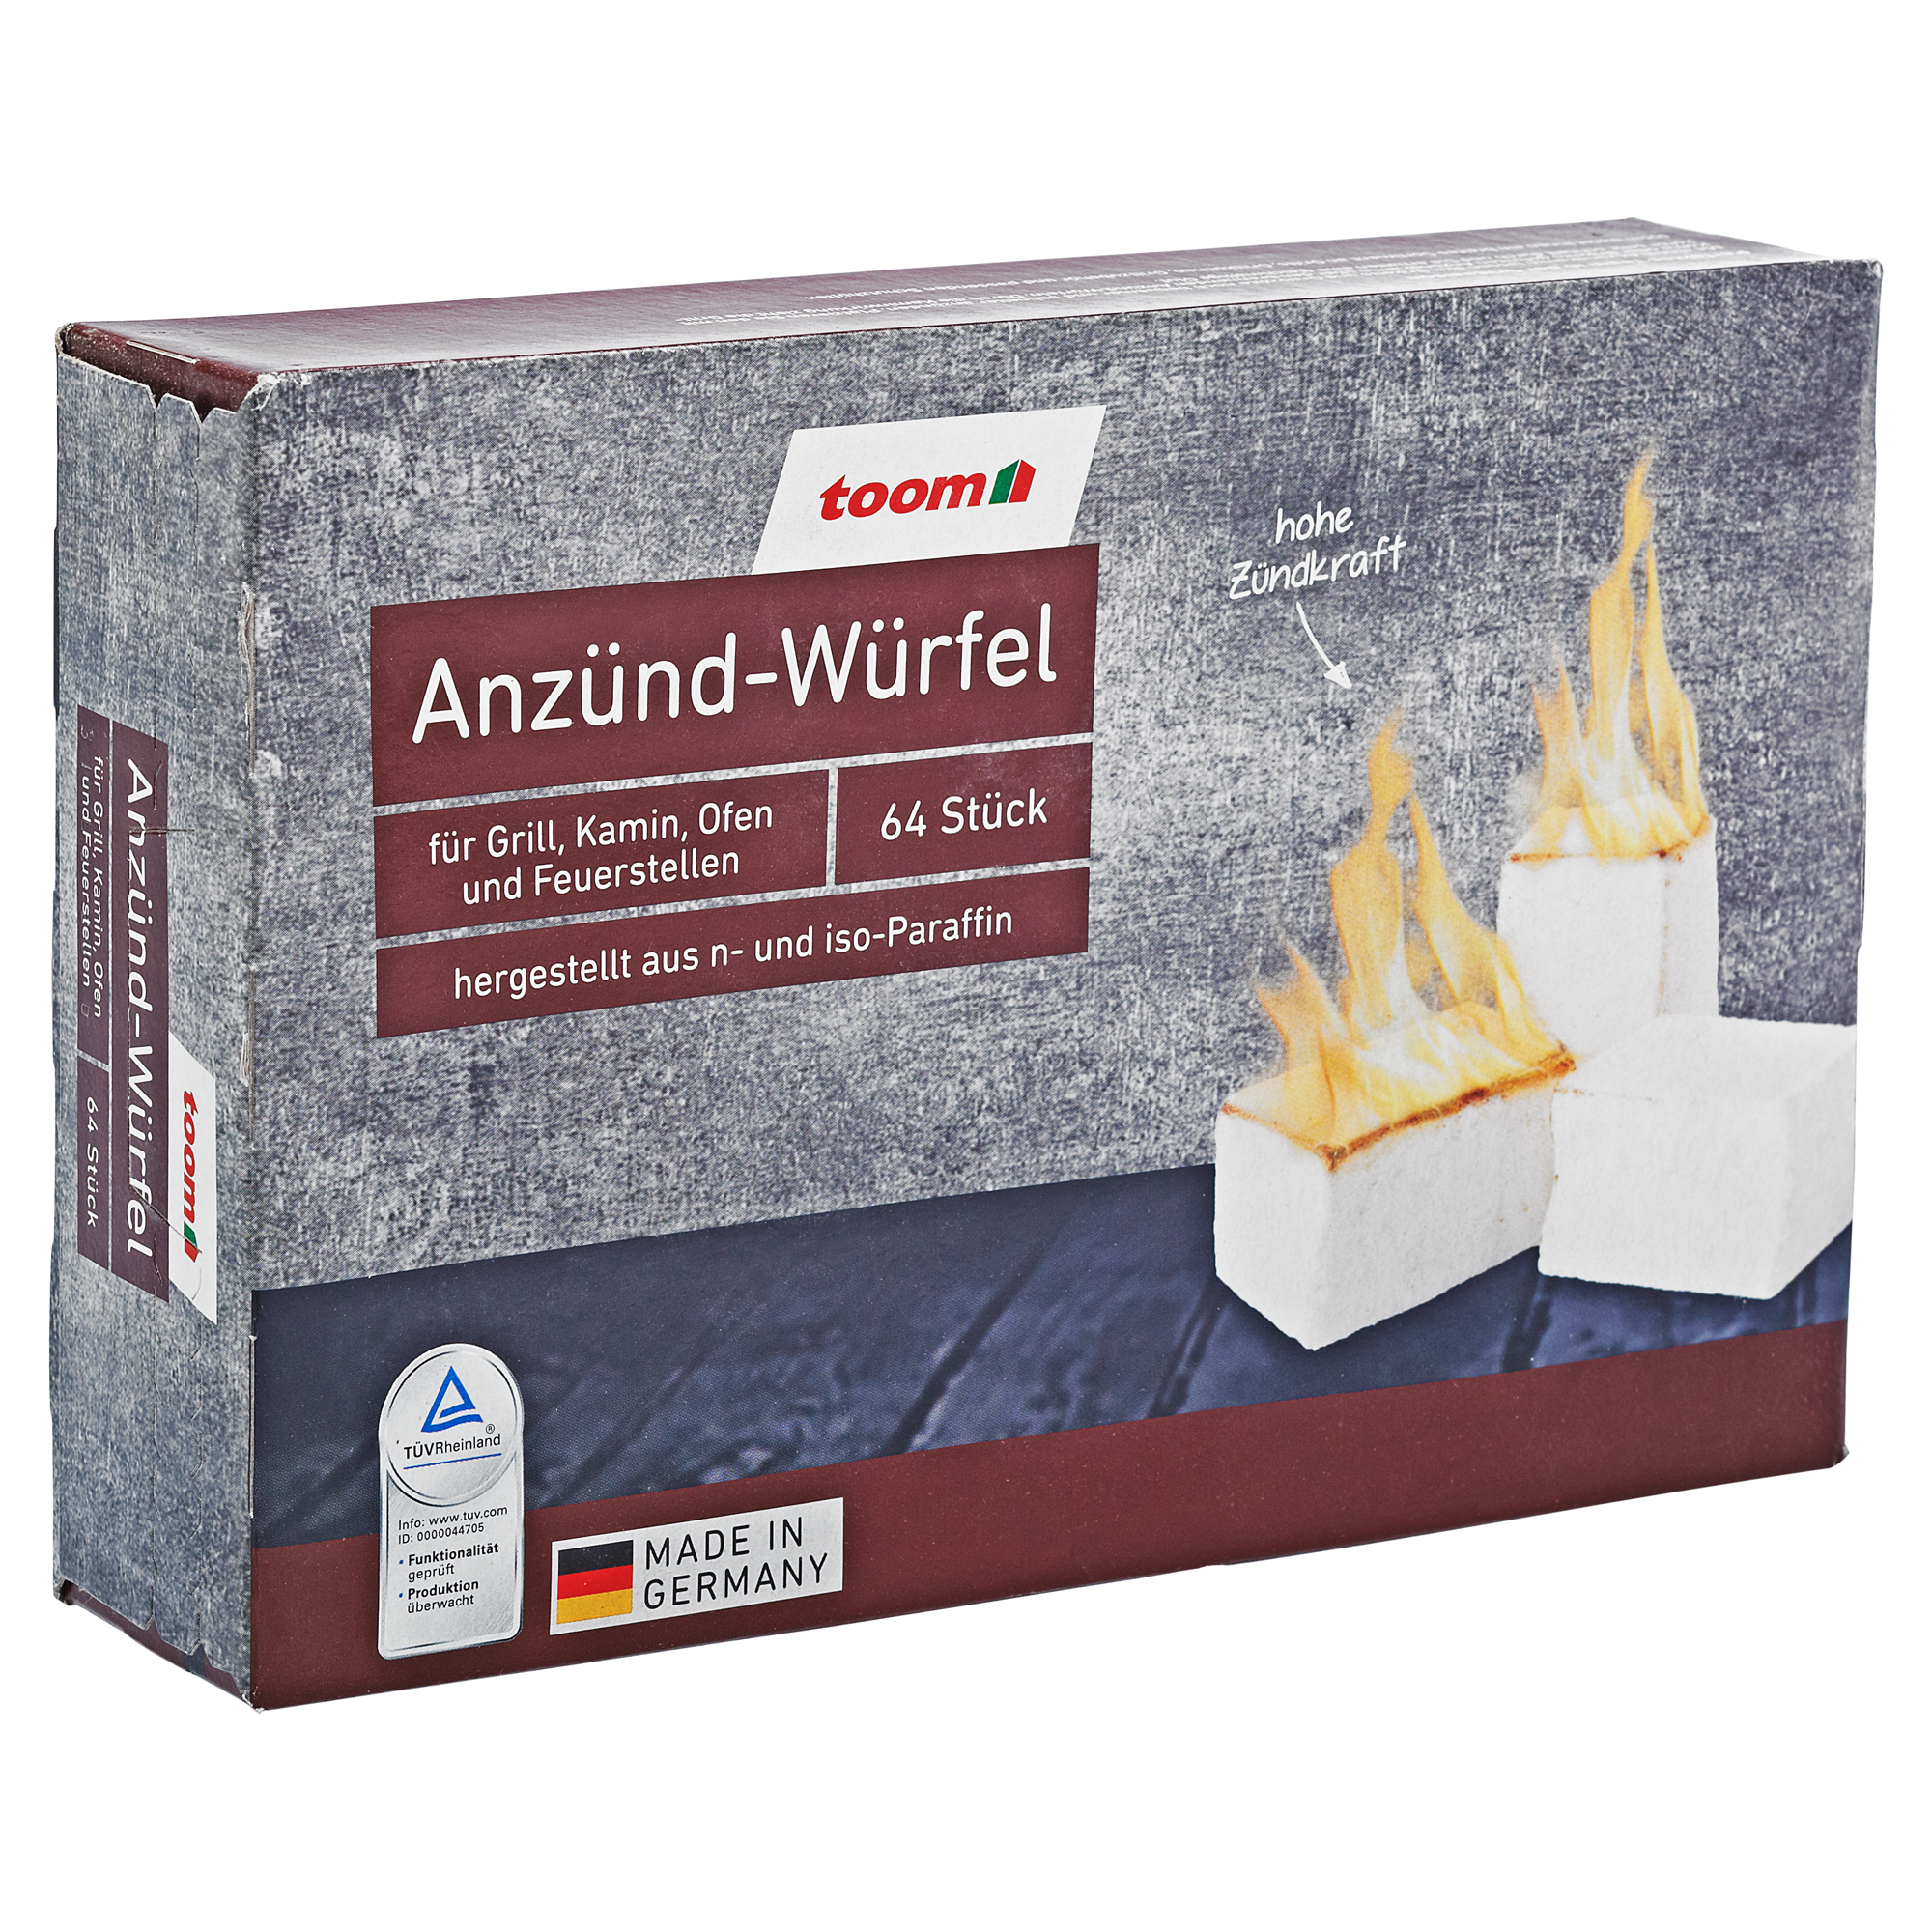 Anzünd-Würfel 64 Stück + product picture